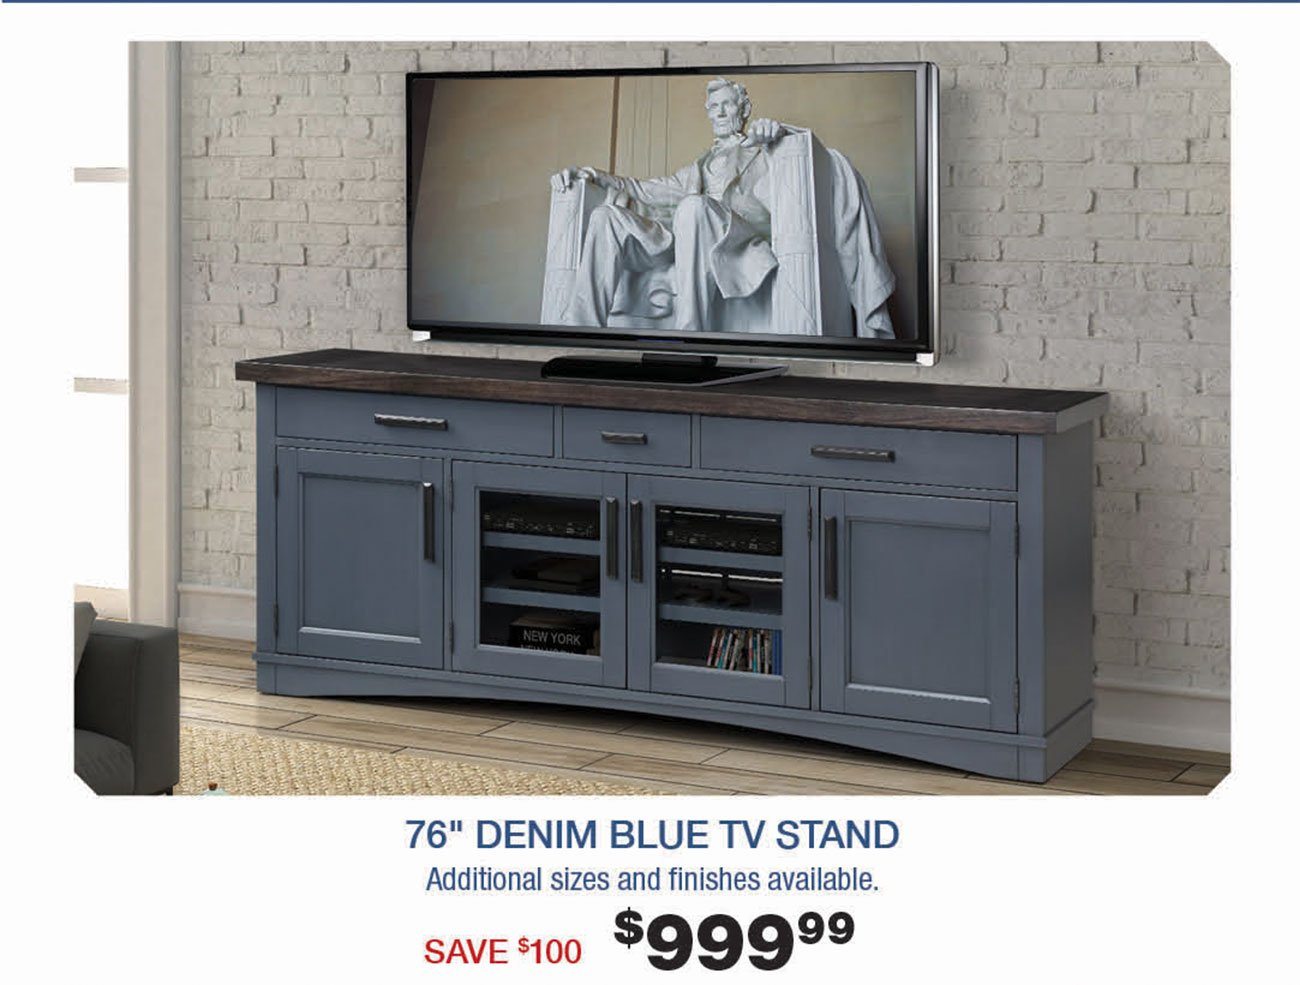 Denim-Blue-TV-Stand